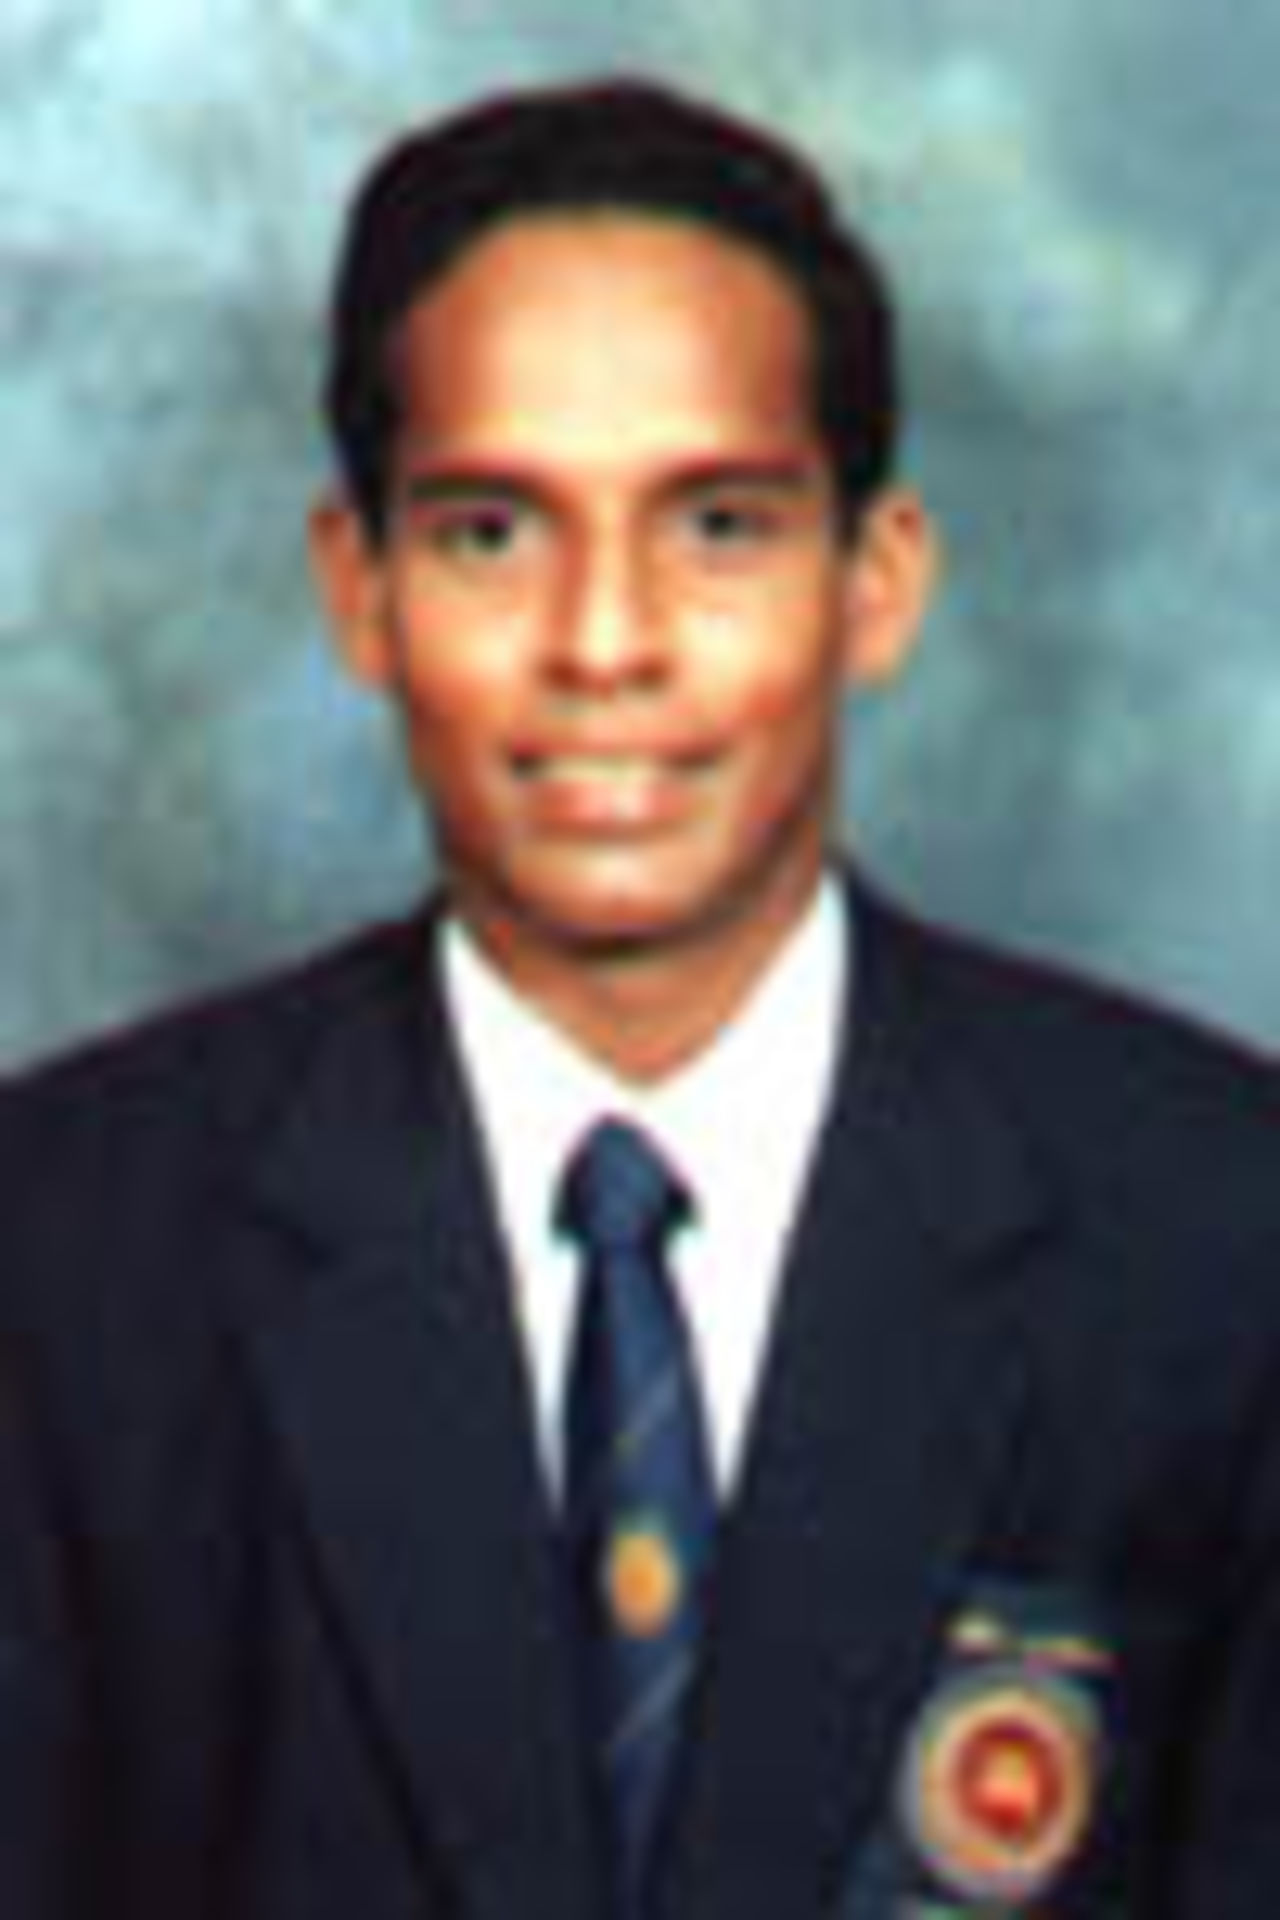 Portrait of Thilan Samaraweera, 2001